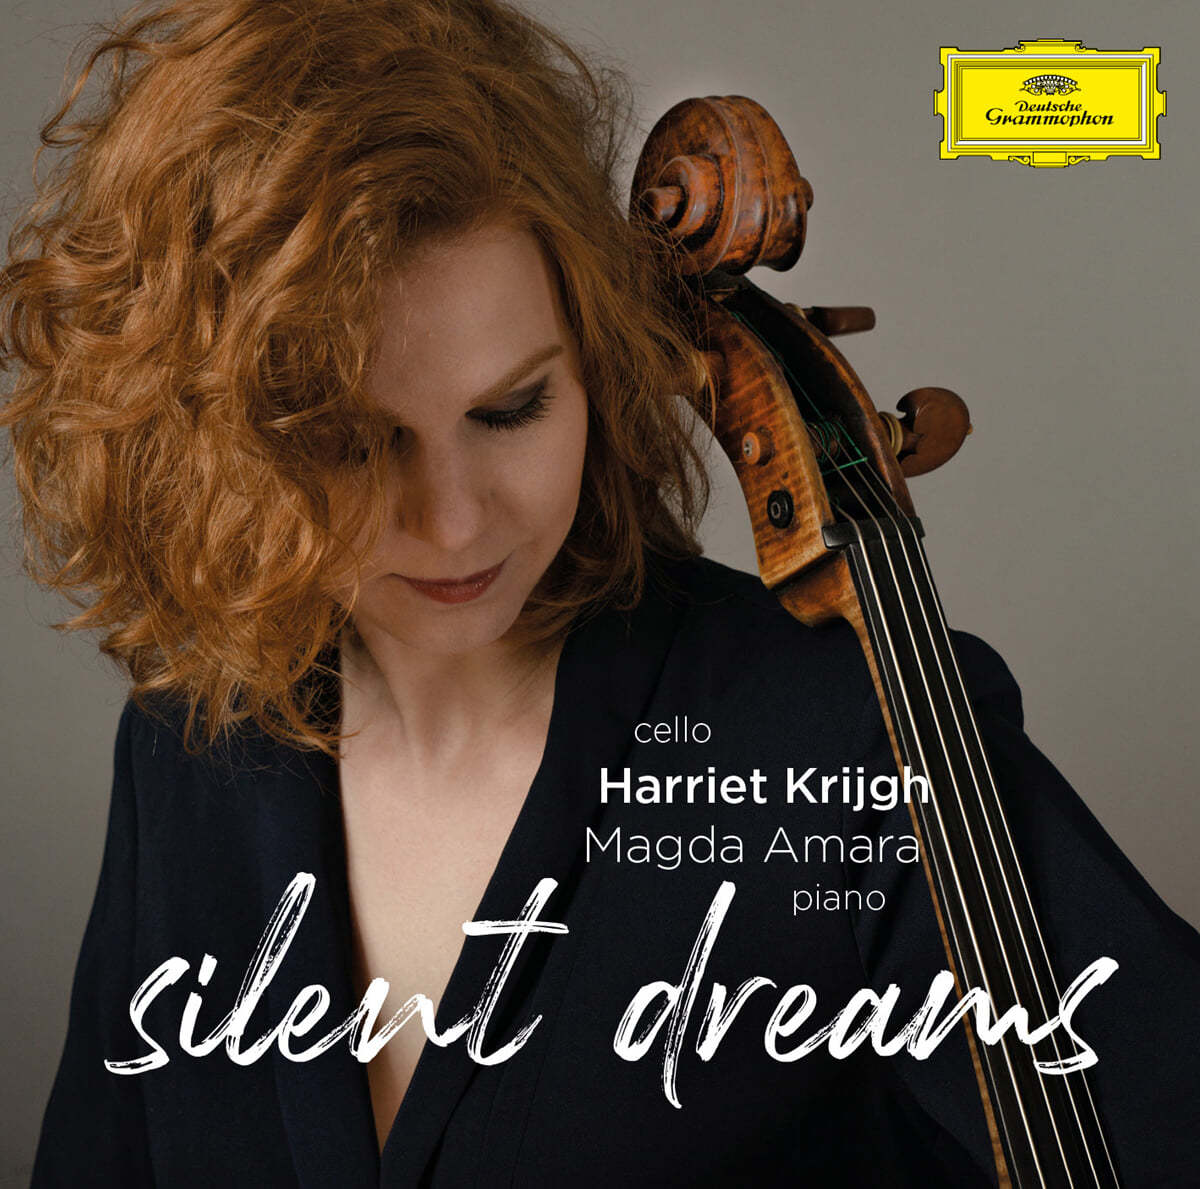 Harriet Krijgh 첼로로 연주한 가곡 - 하리트 크레이흐 (Silent Dreams) 